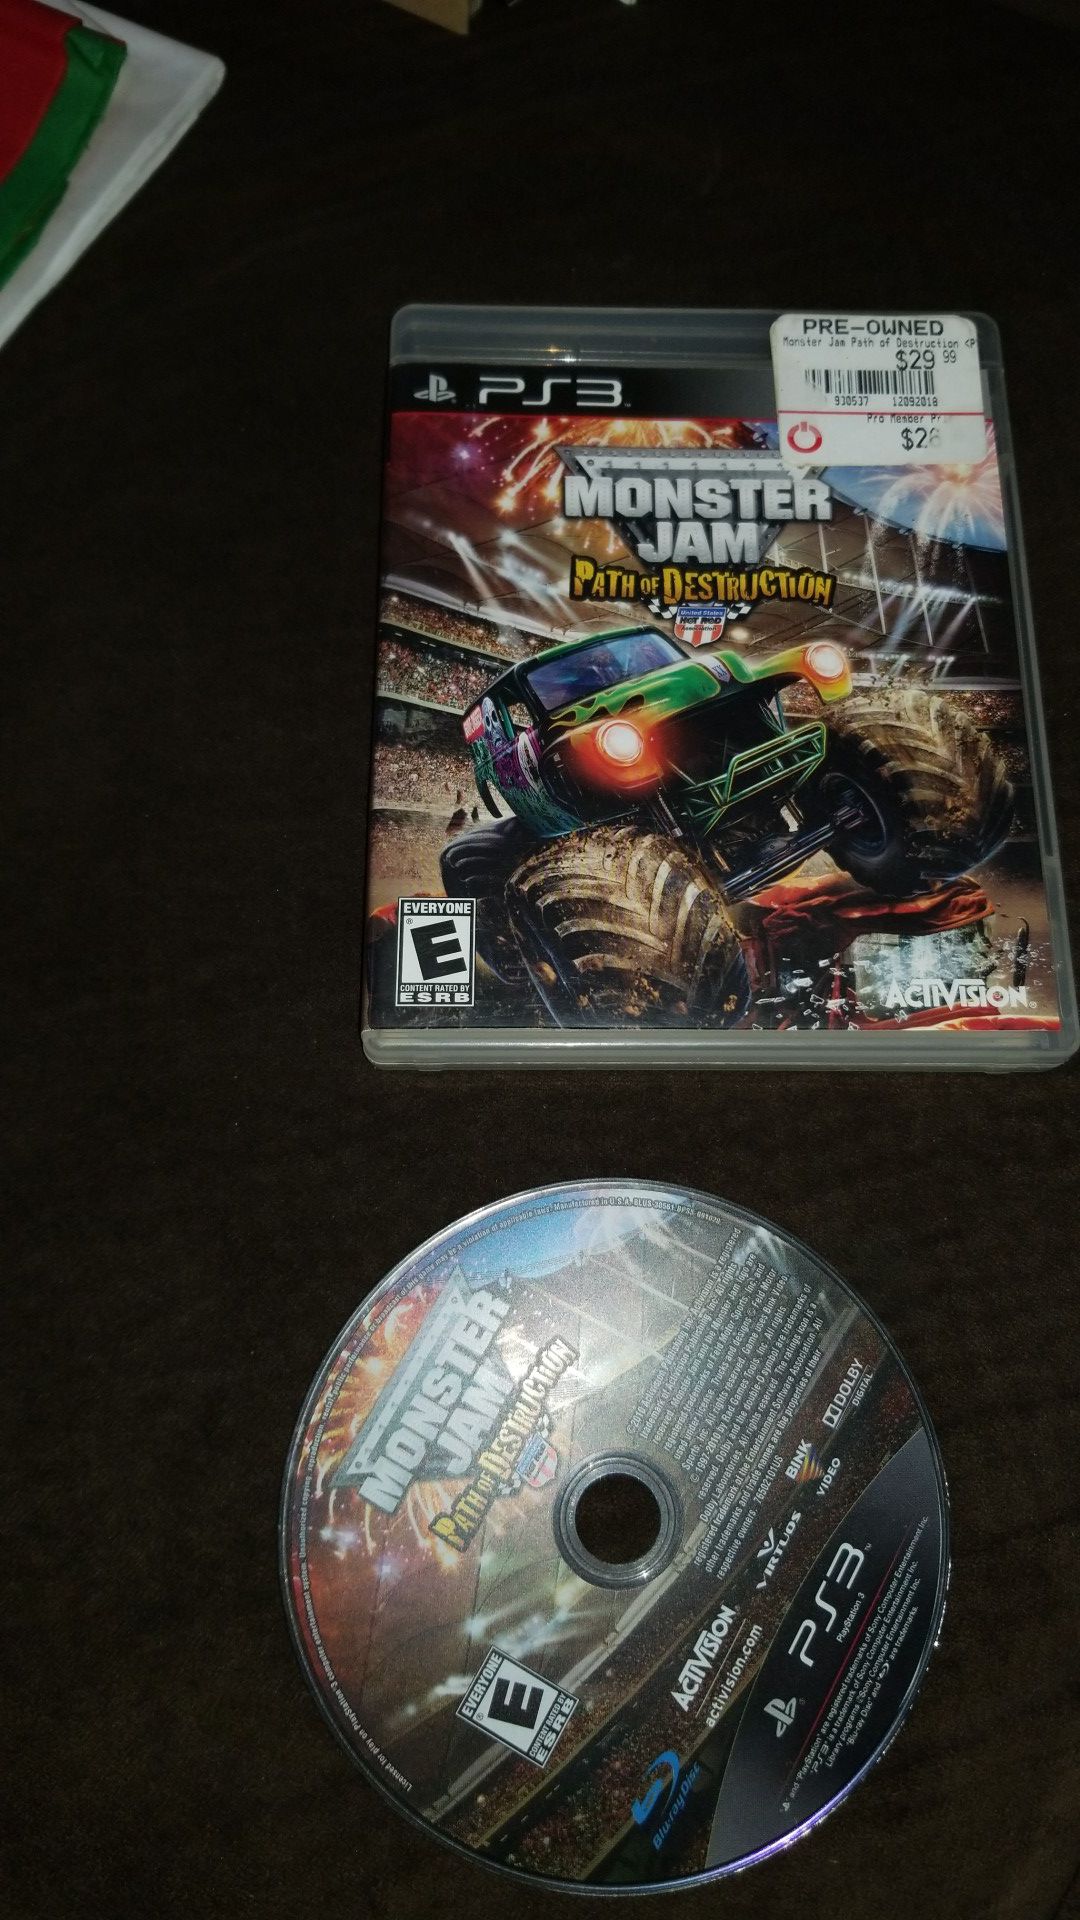 PS3 Monster Jam Path Of Destruction game